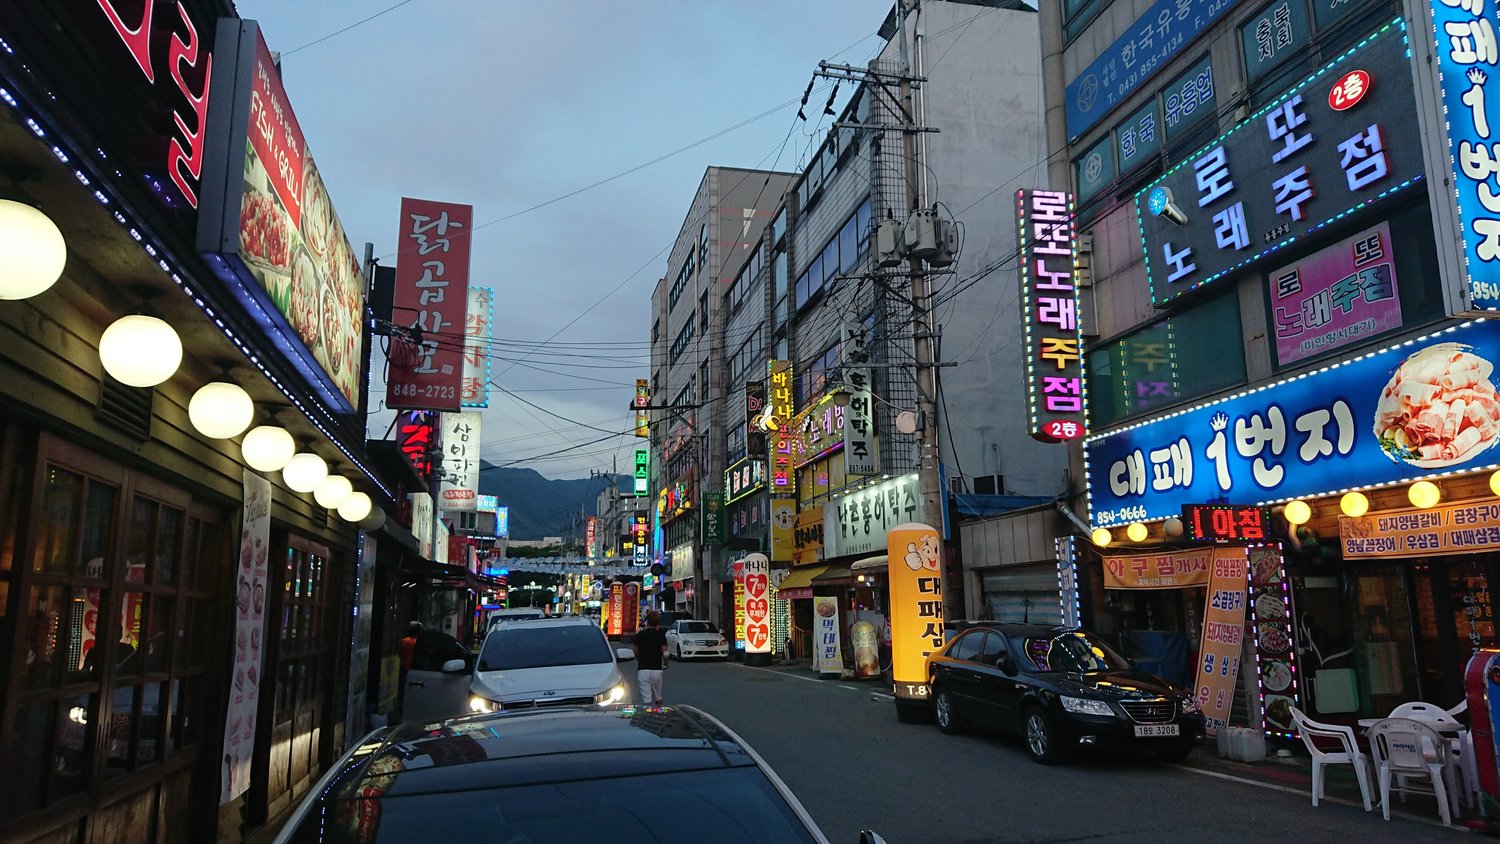 Chungju